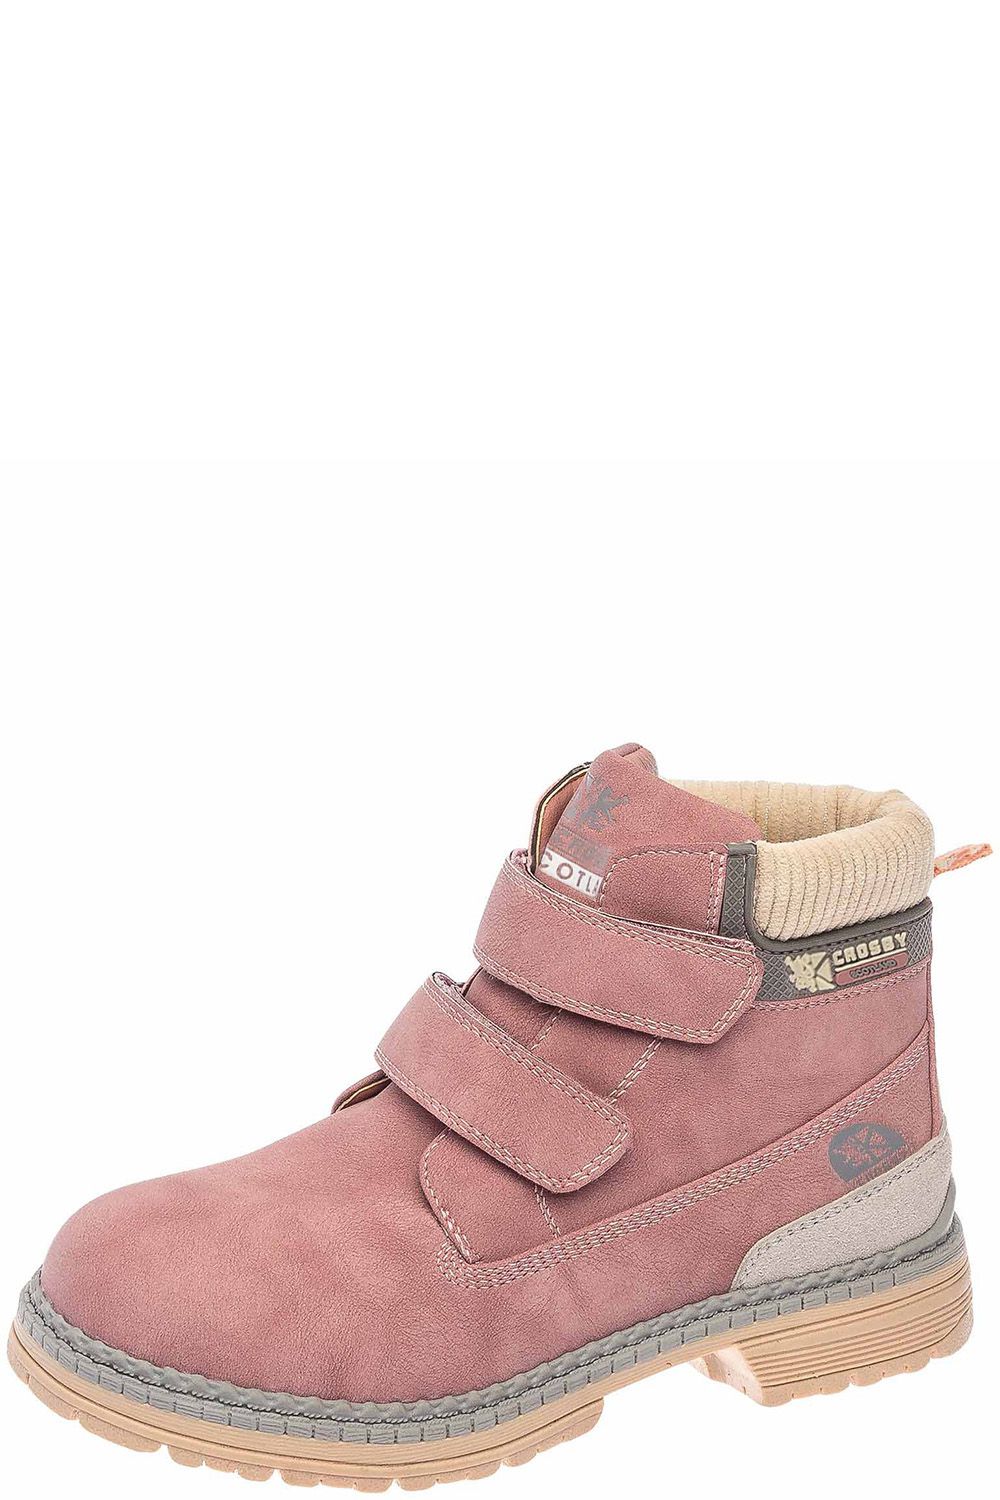 Ботинки Crosby, размер 34, цвет розовый 298430/01-05 - фото 1